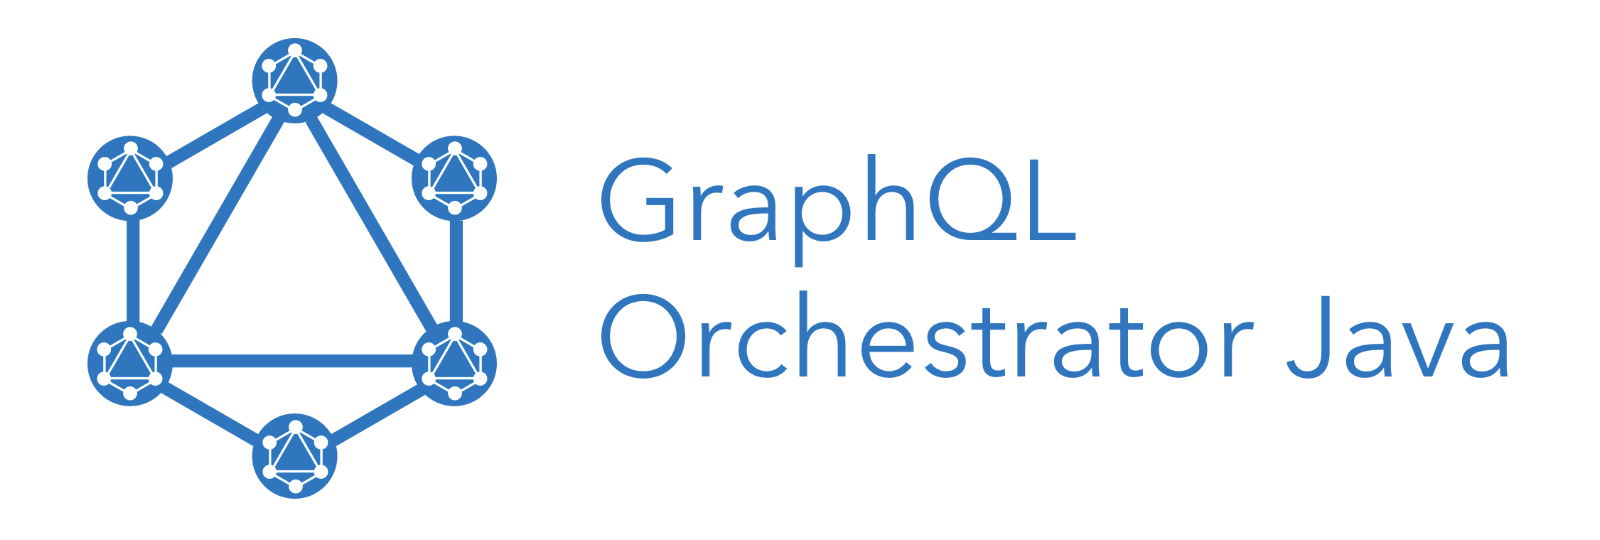 graphql-orchestrator-java